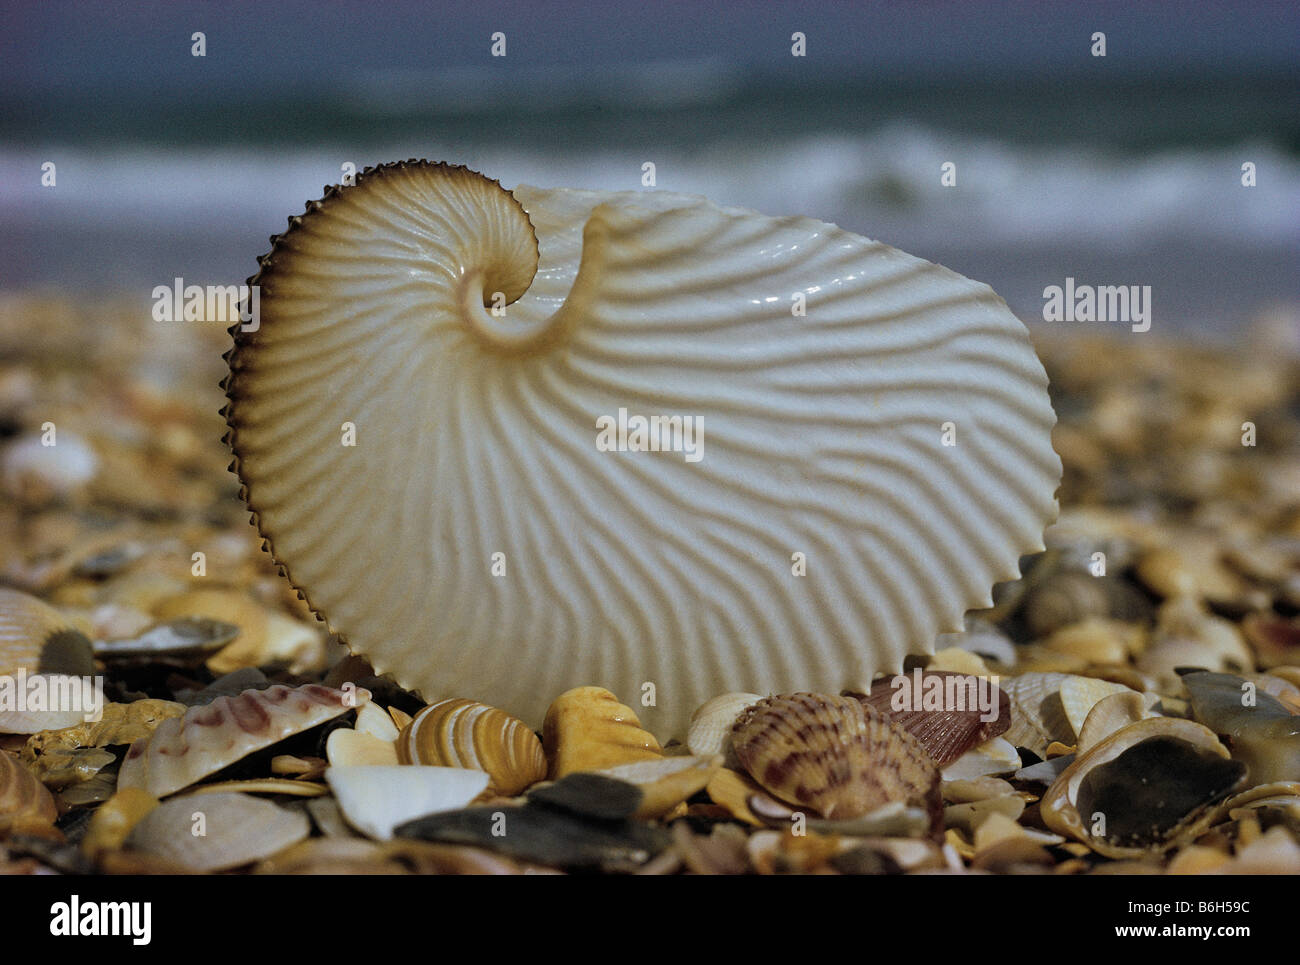 Conchiglie sulla spiaggia, spirale di vita, Argonauta nodosa, simmetrici di bellezza di una carta Nautilus, Nuova Caledonia Foto Stock